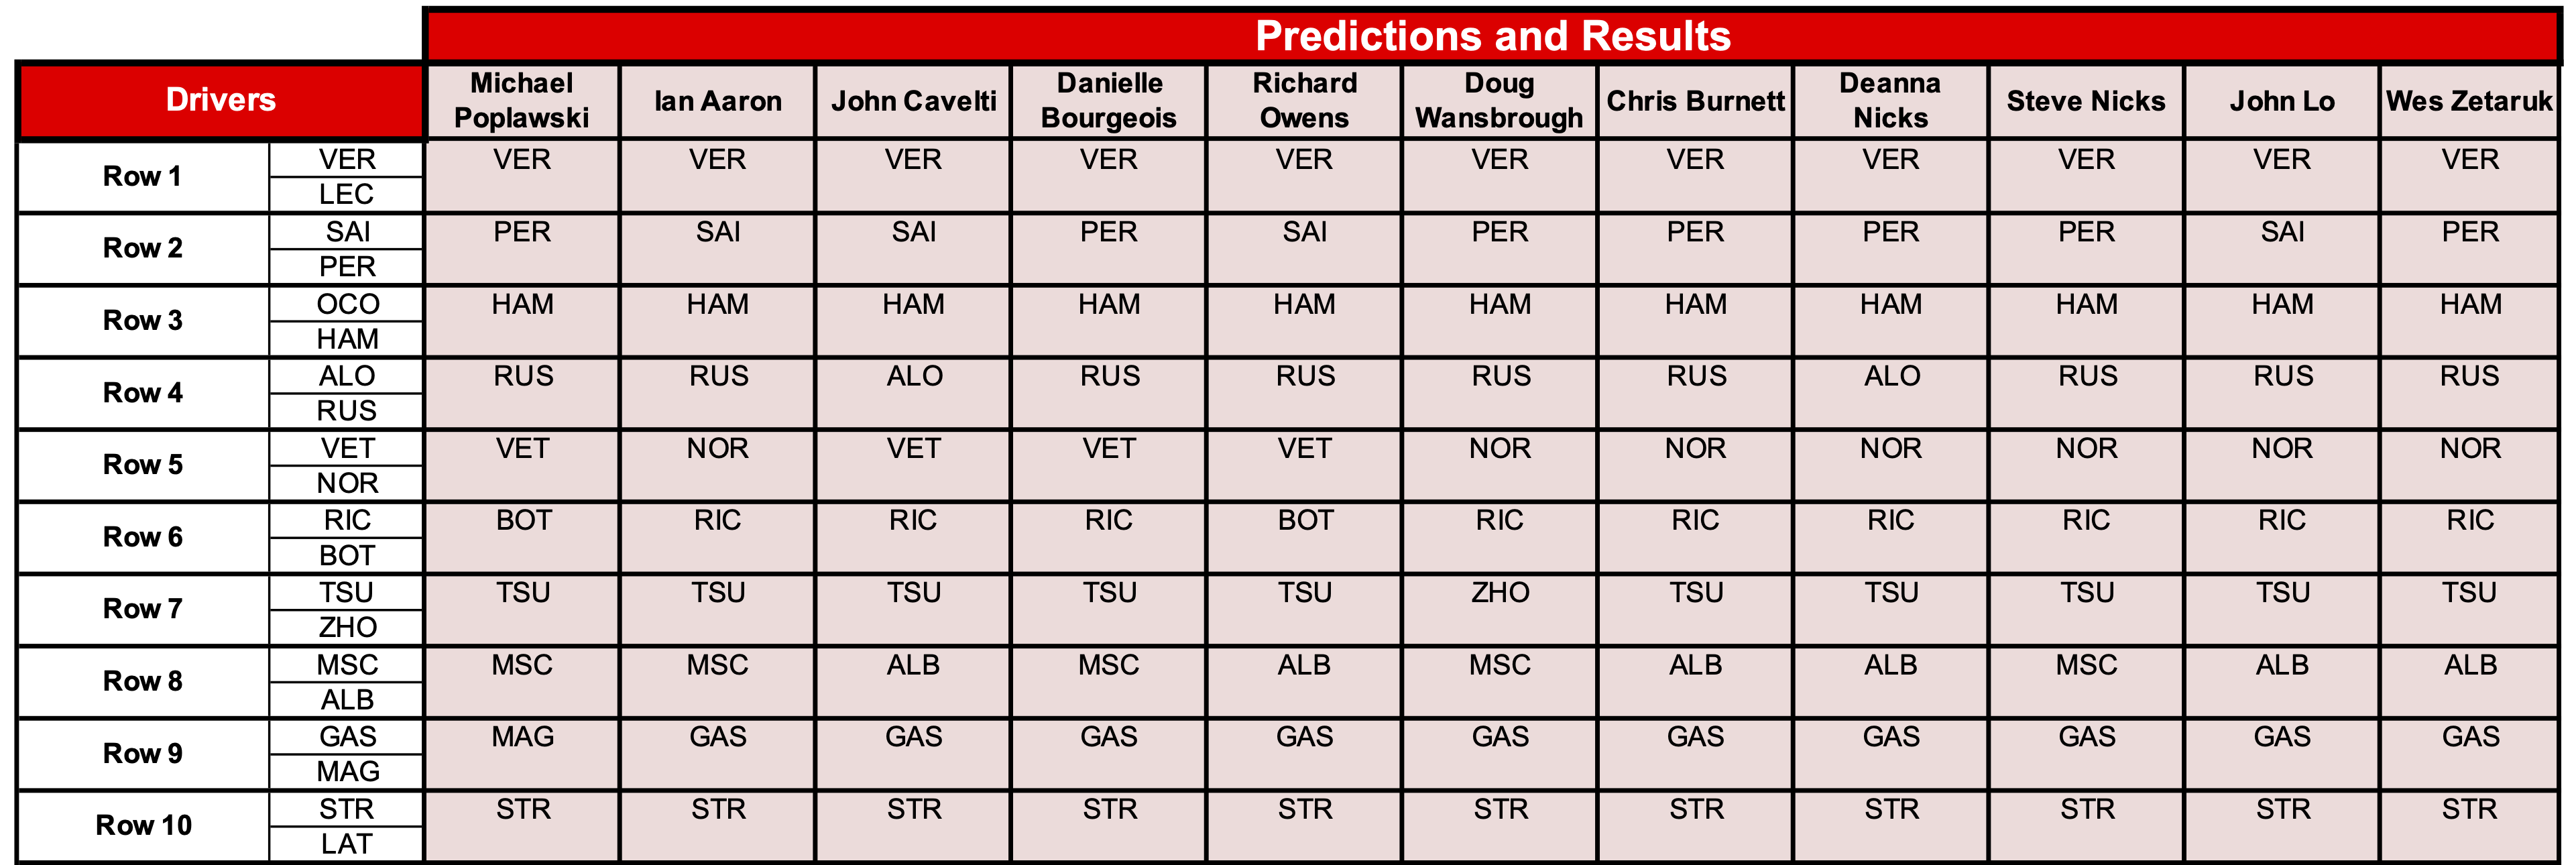 18 predictions